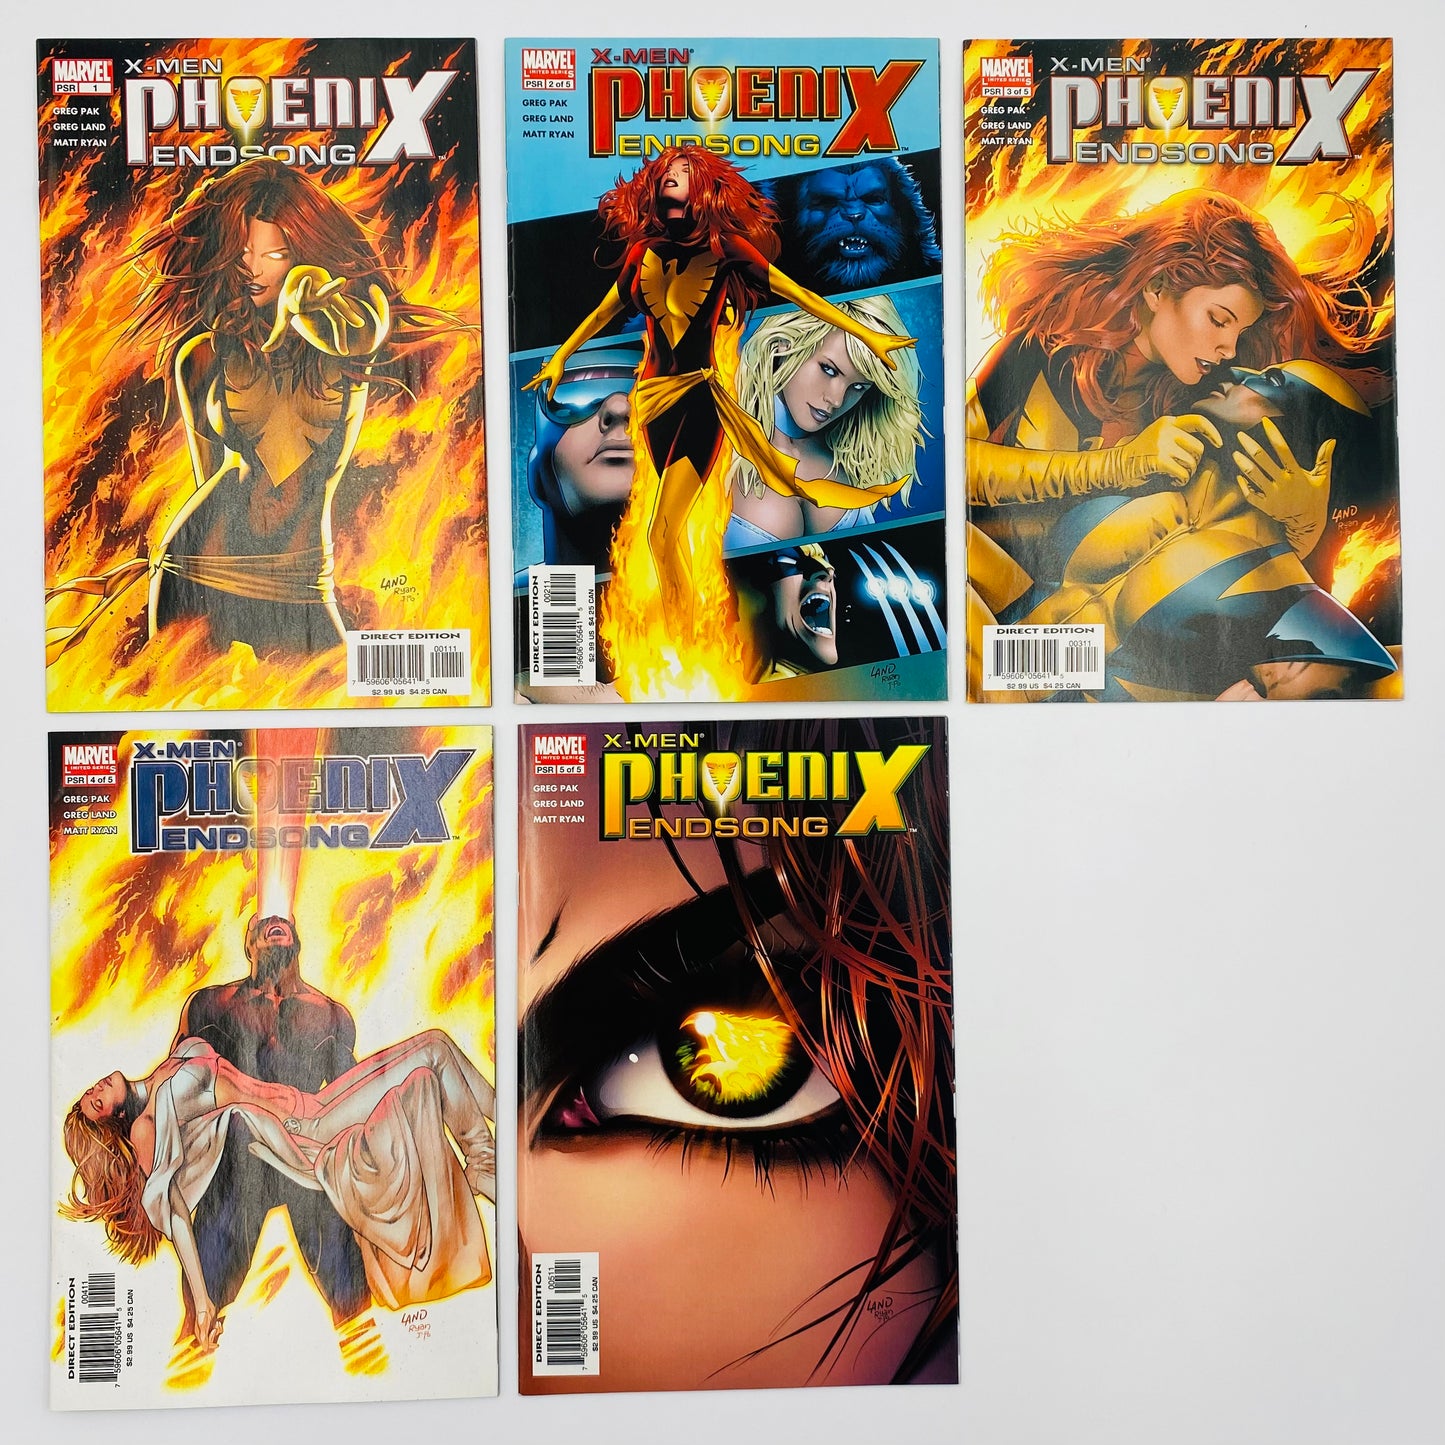 Phoenix Force Fun Pack: X-Men Phoenix Endsong #1-5 (2005-2006) X-Men Phoenix Warsong #1-5 (2006-2007) Marvel